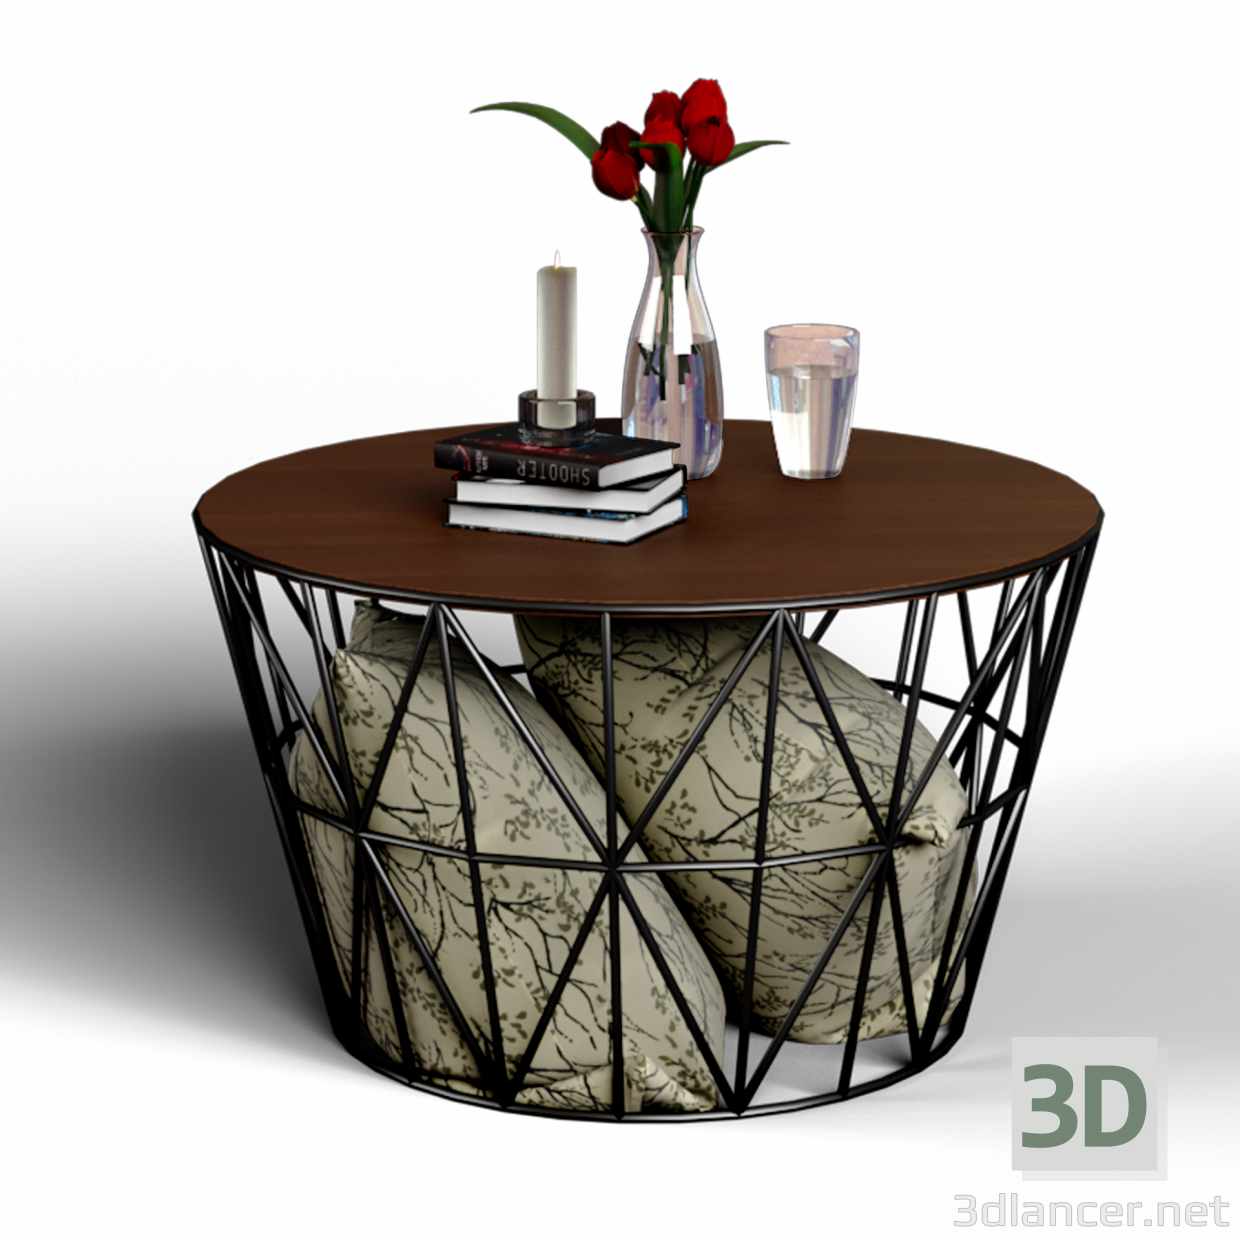 Stolik 3D modelo Compro - render